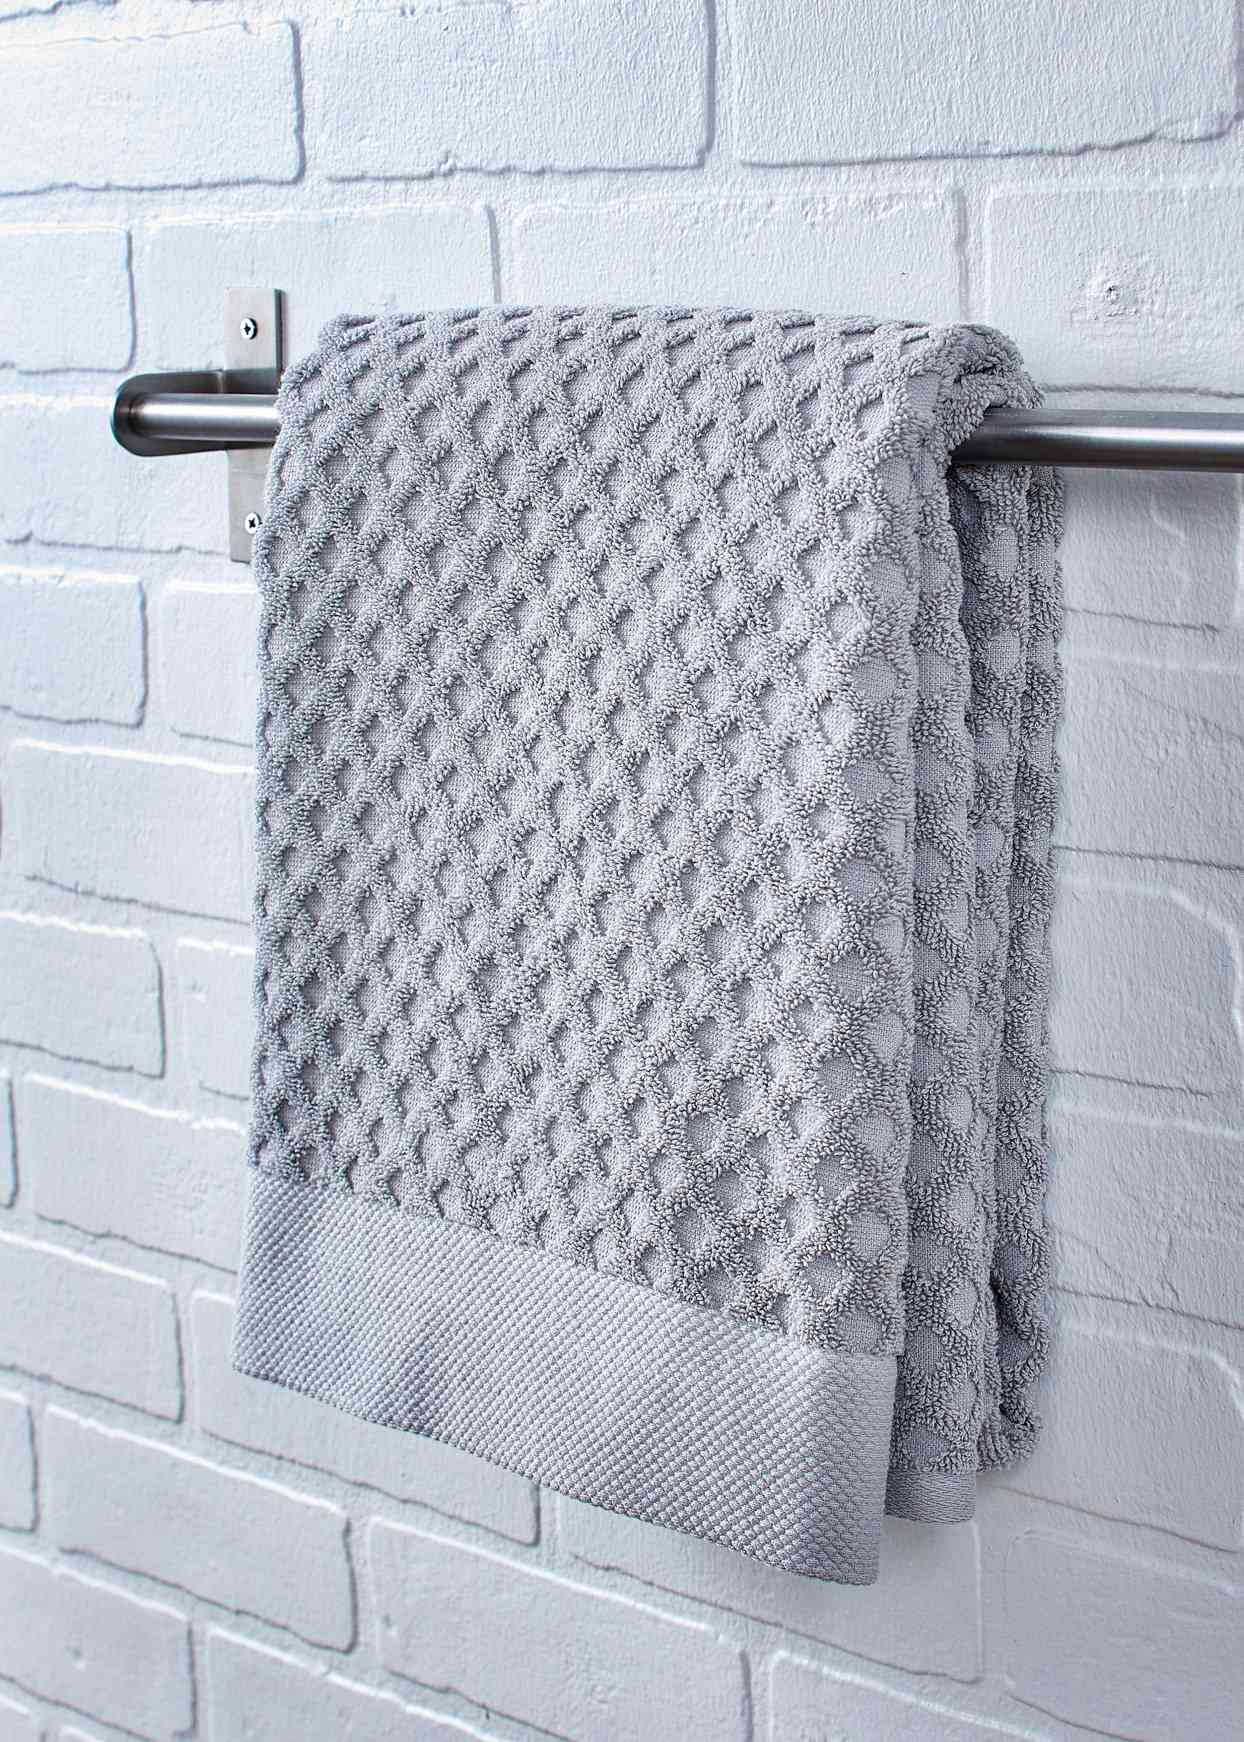 gray towel hanging on bar